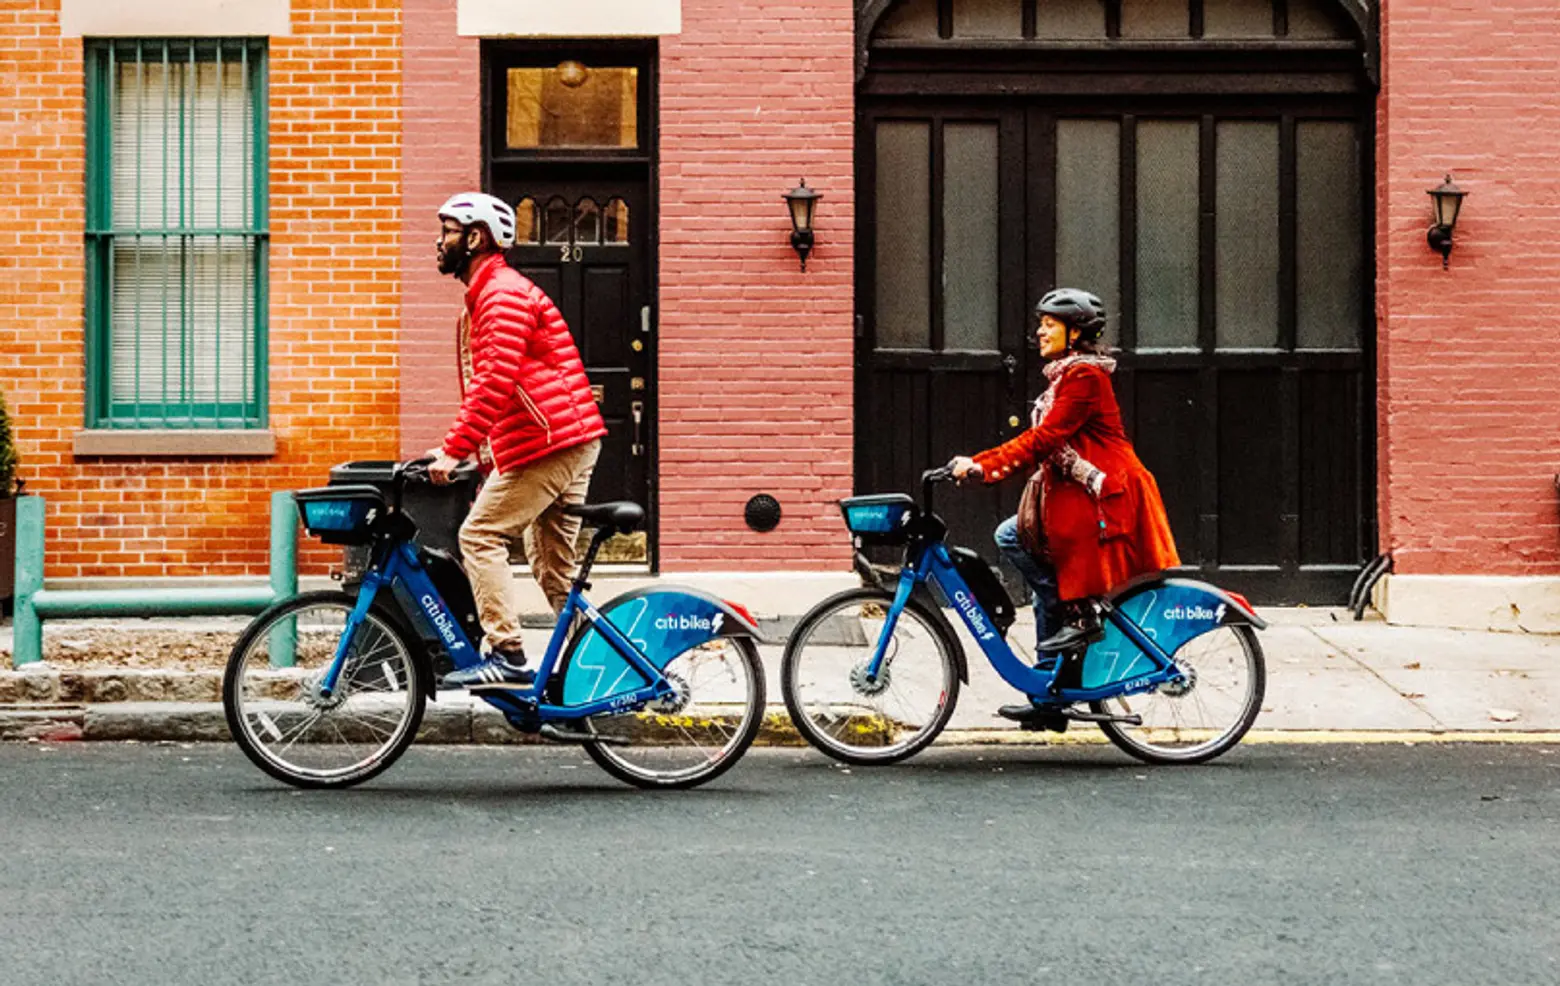 Citi Bike to launch joint bike share program in Hoboken and Jersey City